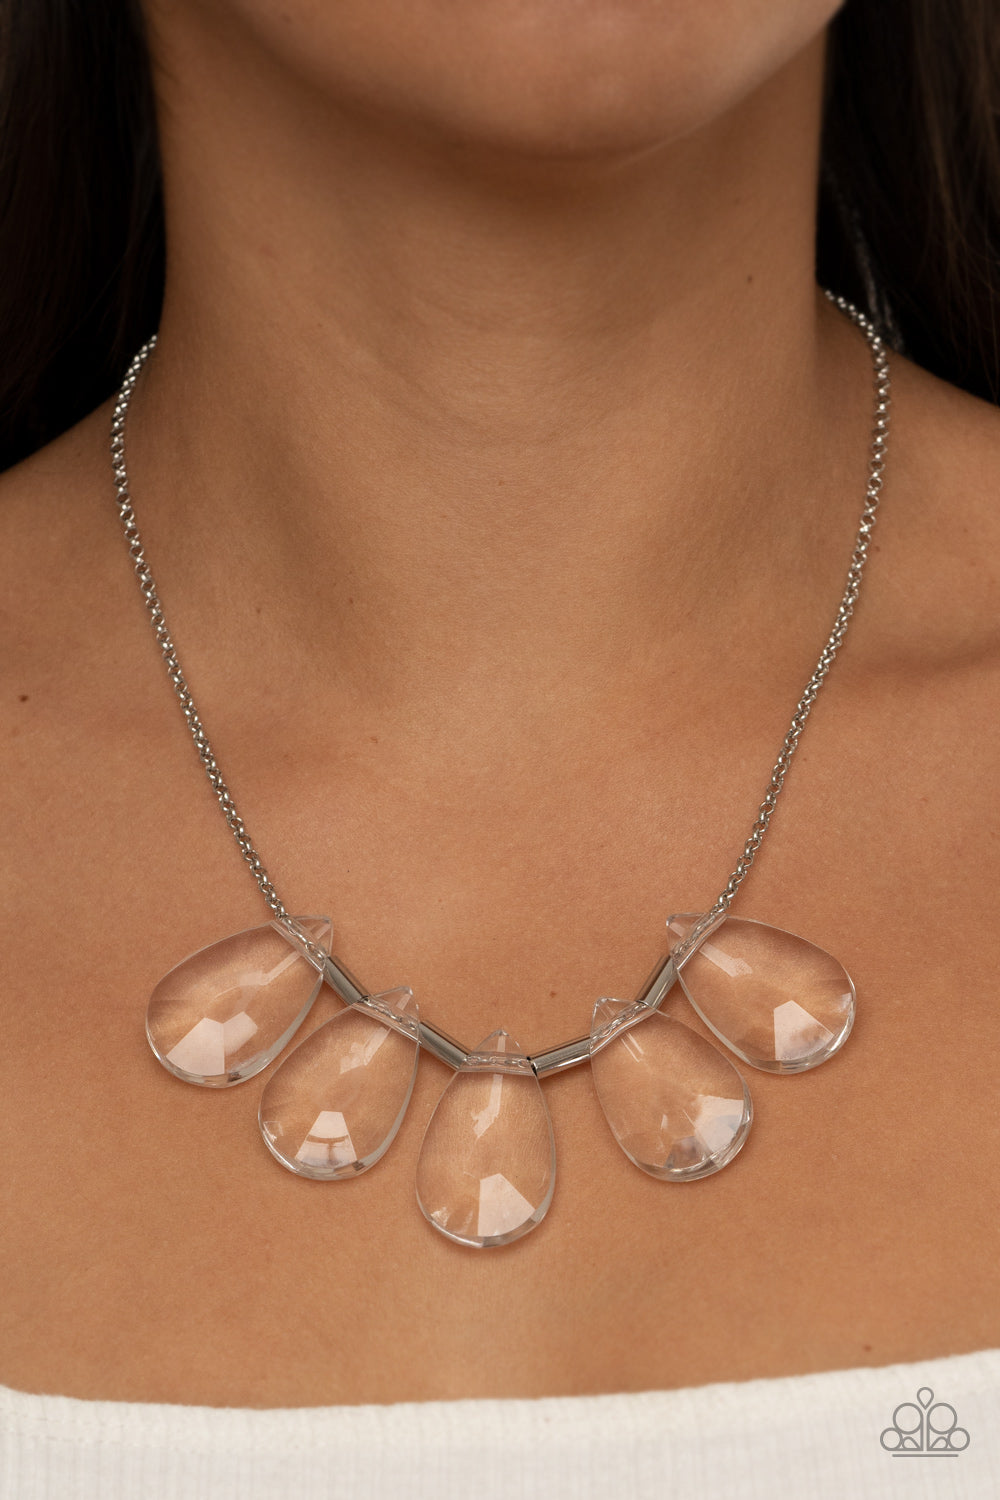 HEIR It Out - White Necklace Set - Princess Glam Shop